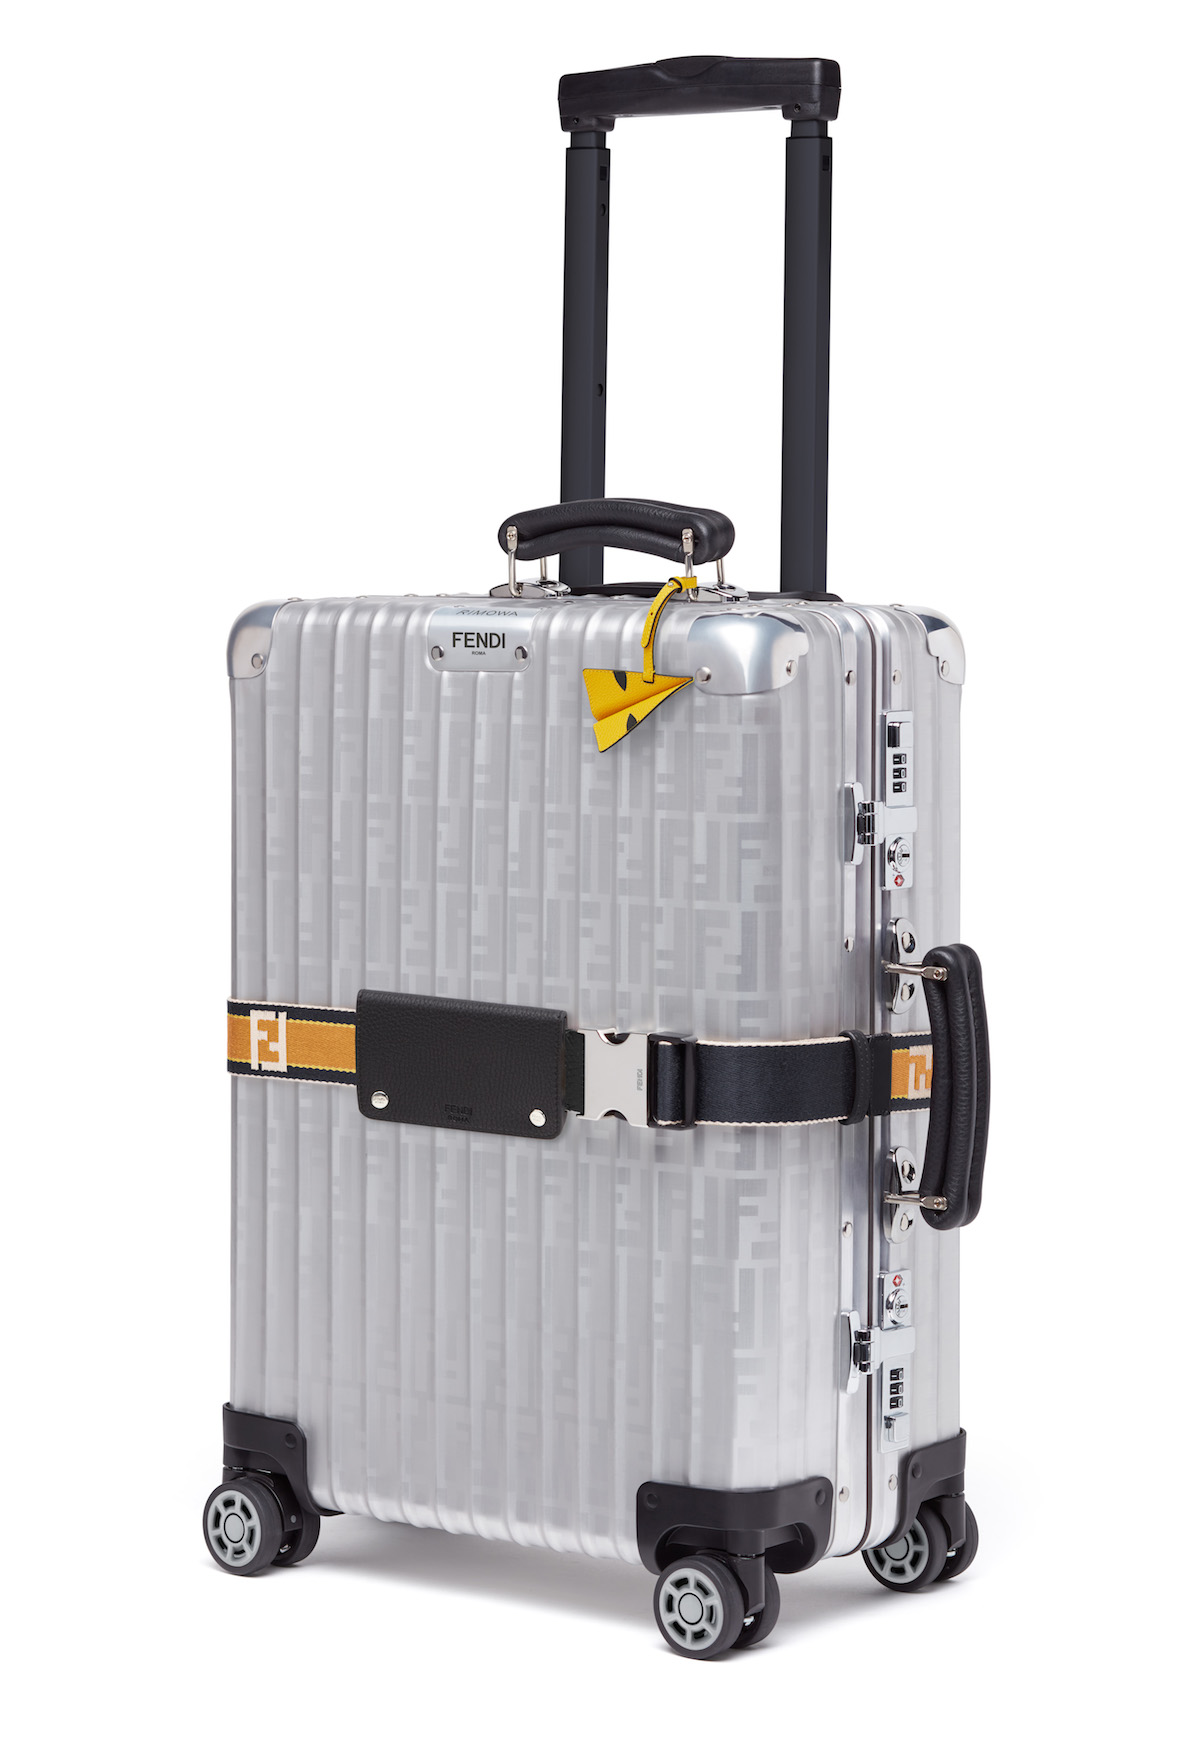 FENDI x RIMOWA Luggage: The Second 